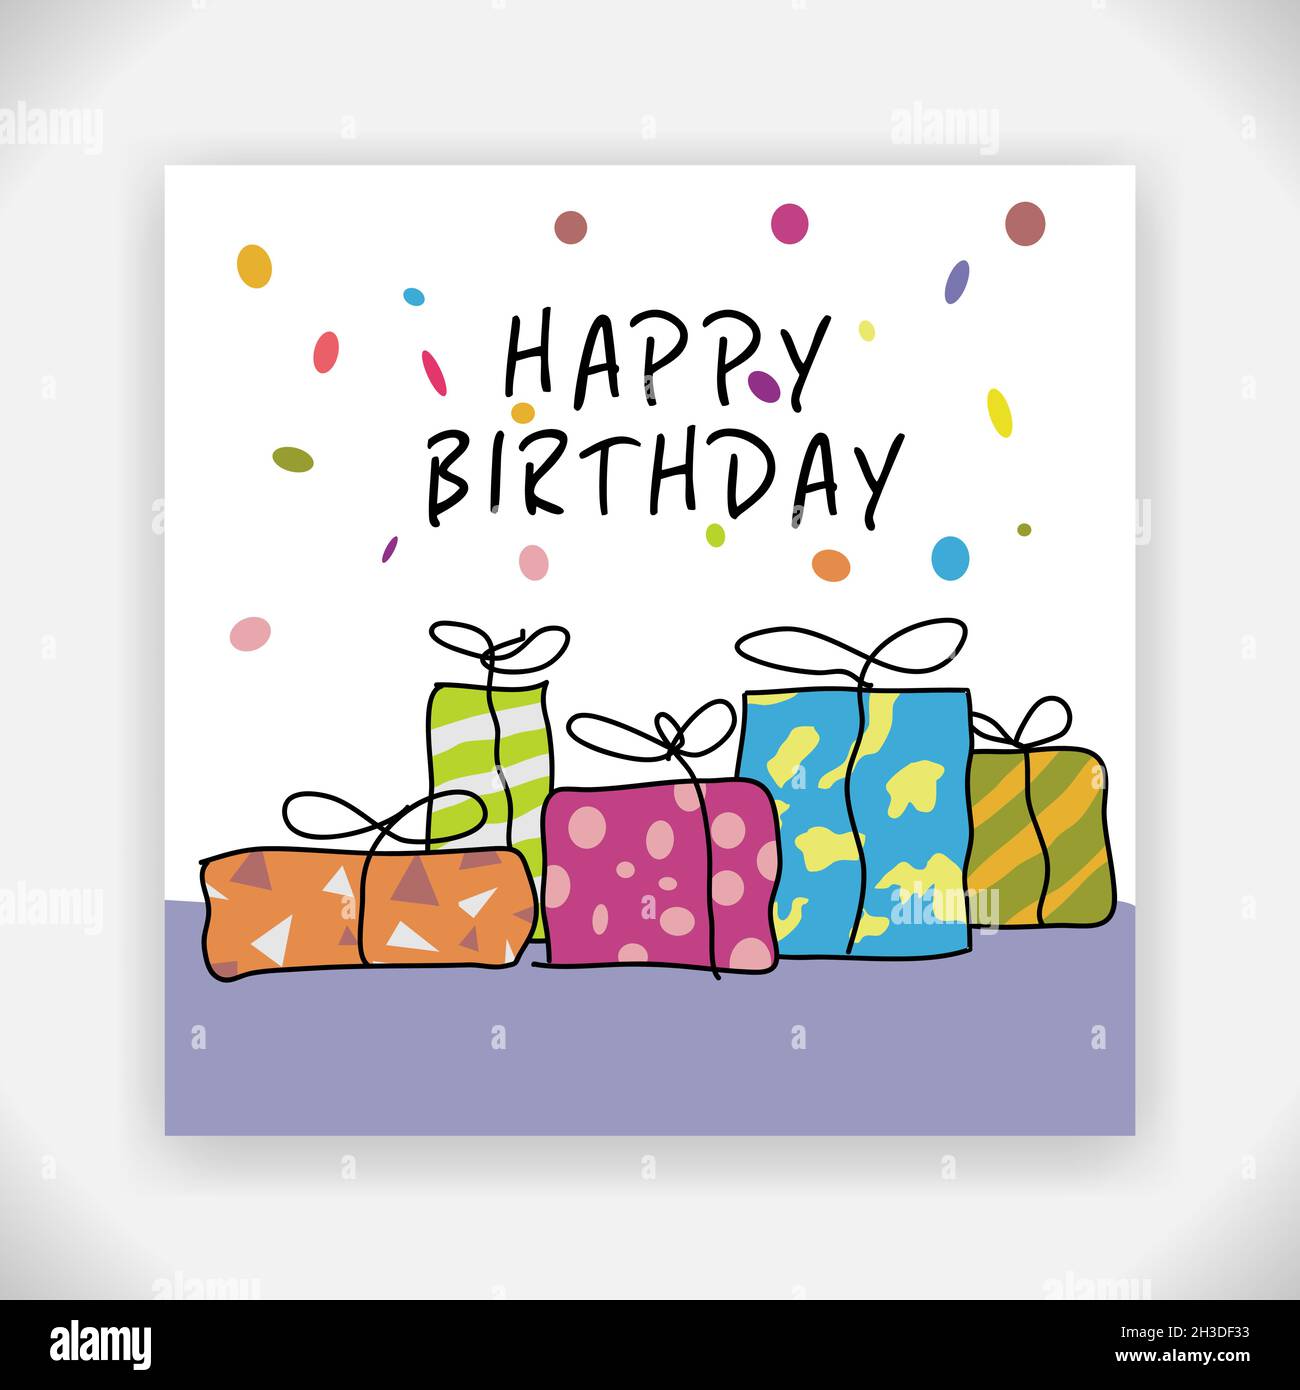 Happy Pandas 30 Day Coloring Challenge Blog Hop  Birthday card drawing Happy  birthday drawings Happy birthday cards diy